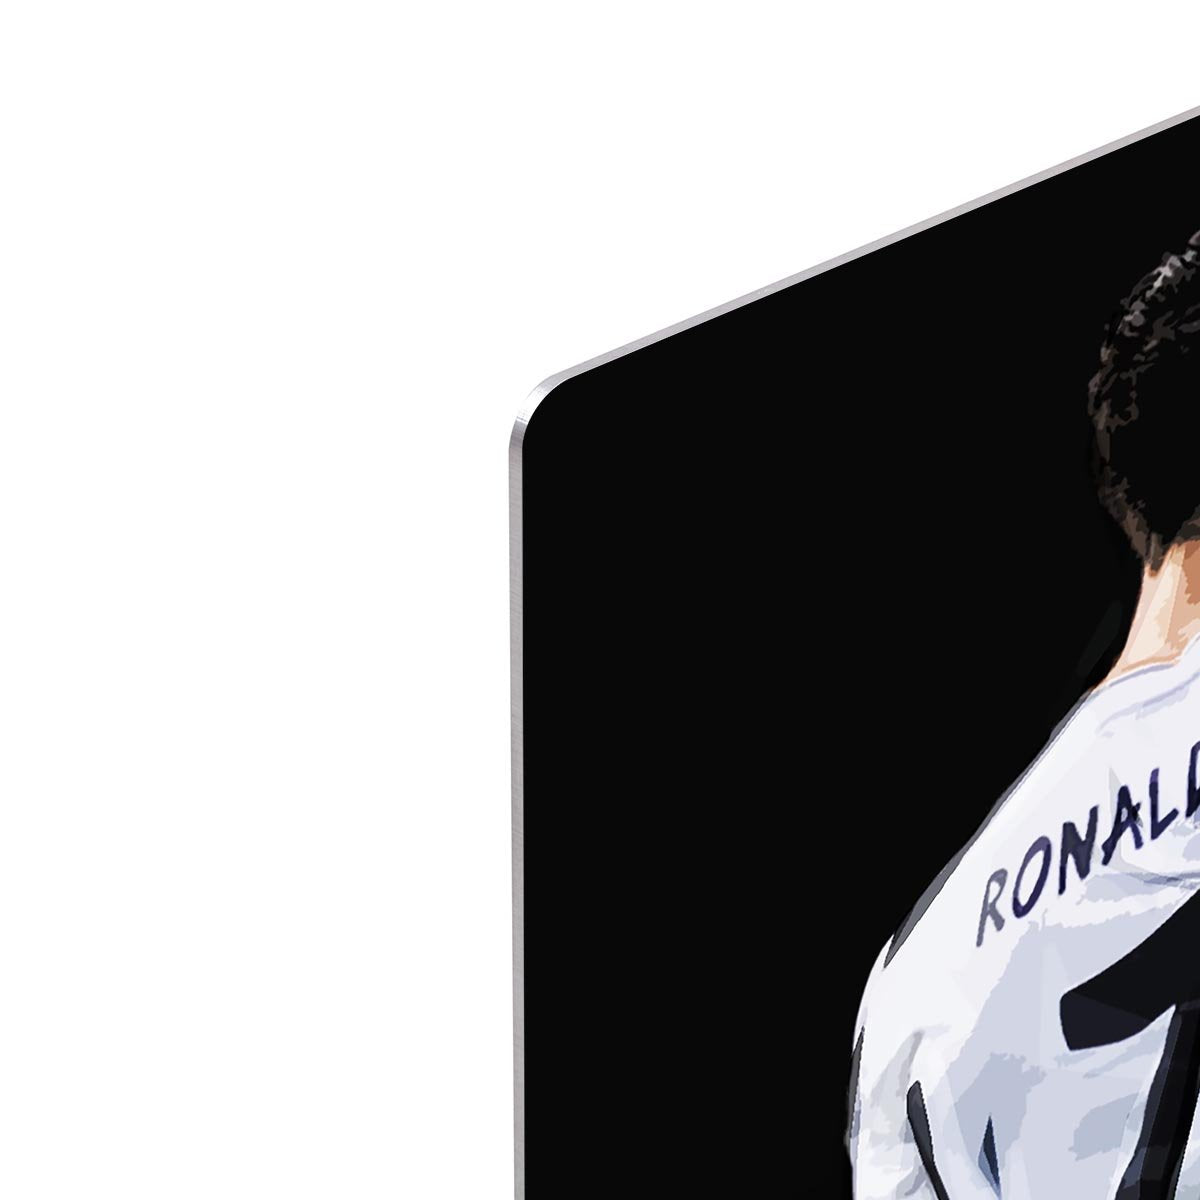 Cristiano Ronaldo HD Metal Print